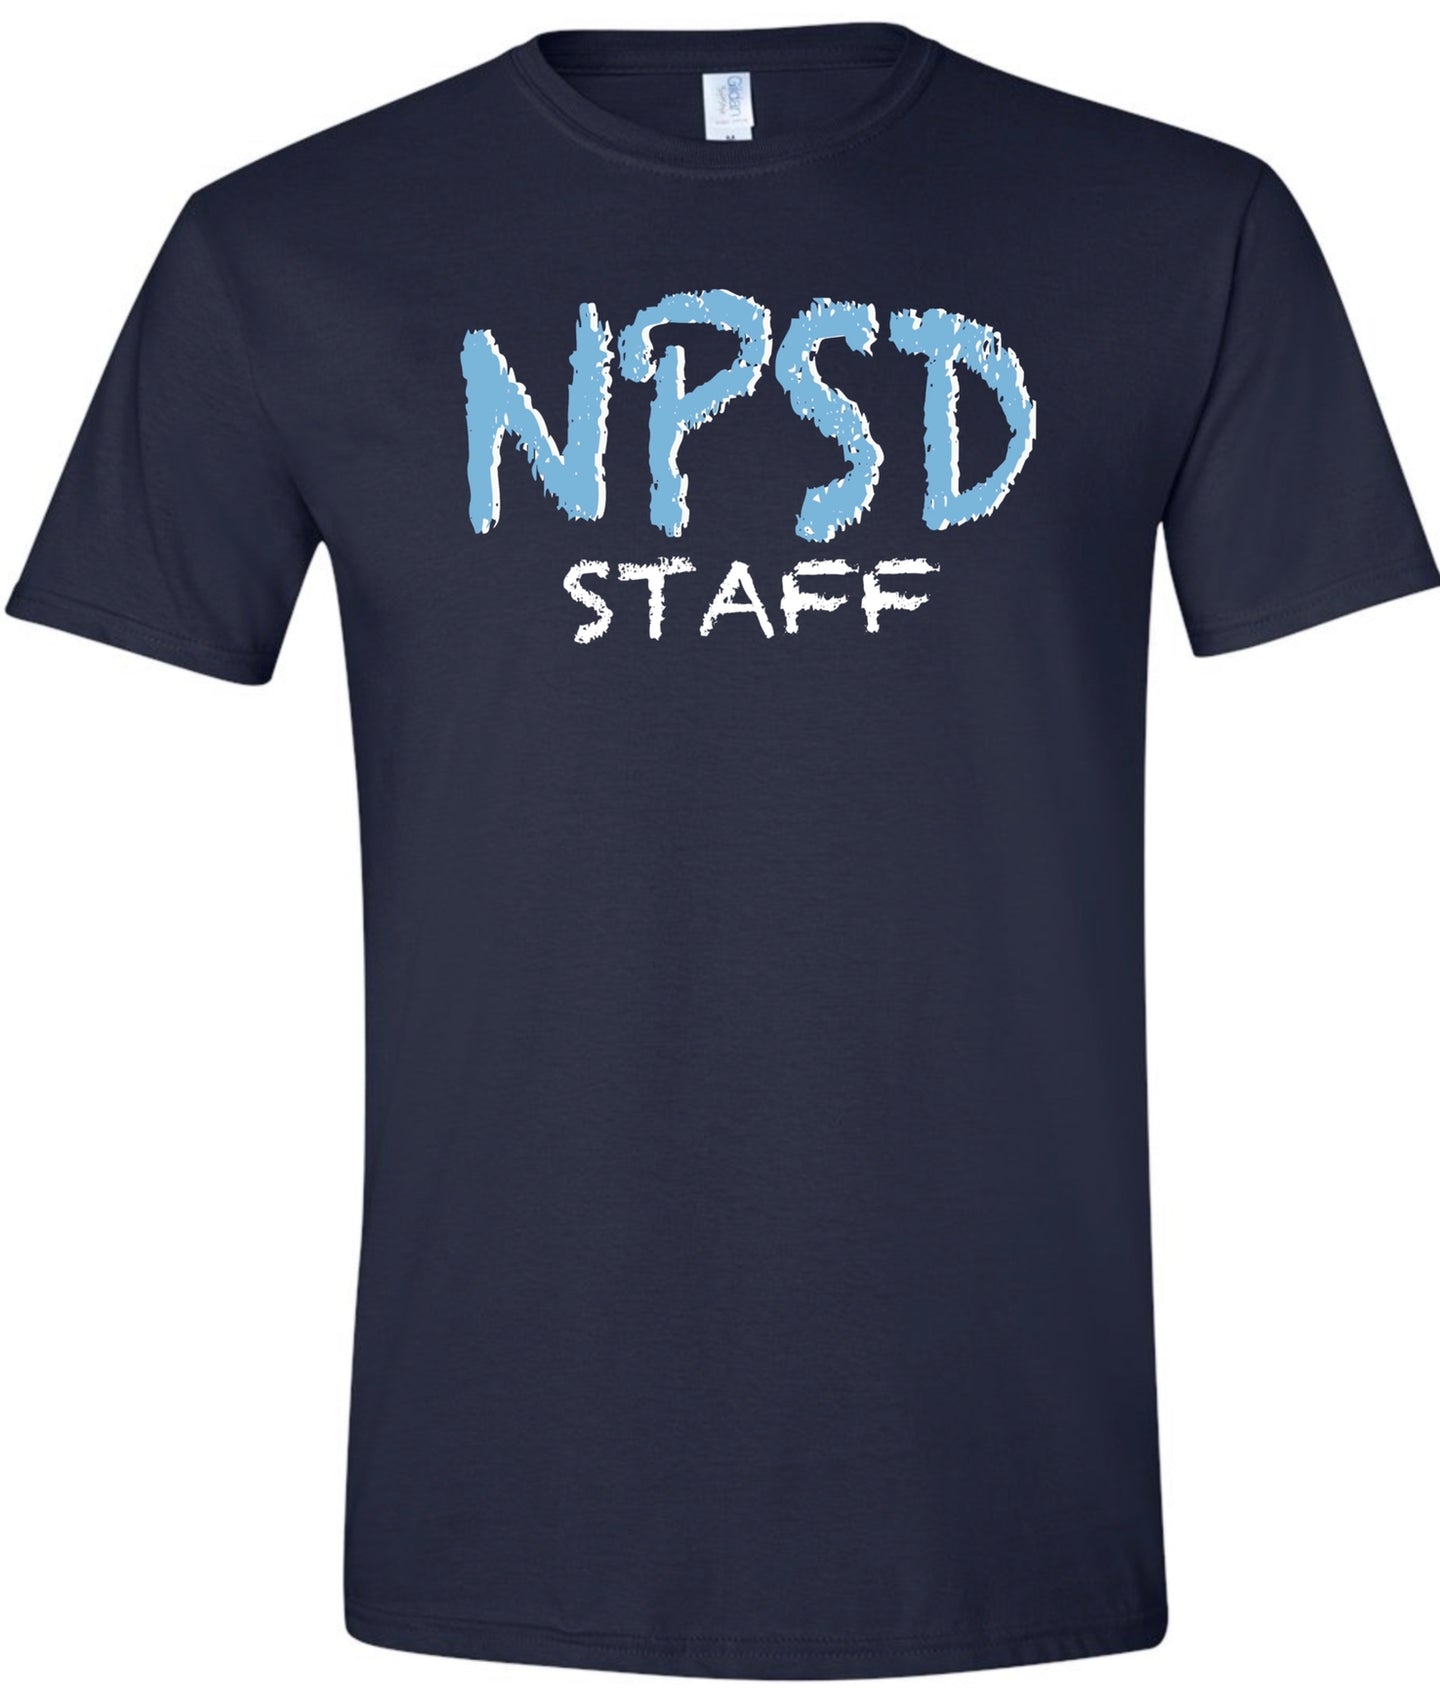 NPSD Staff Tee